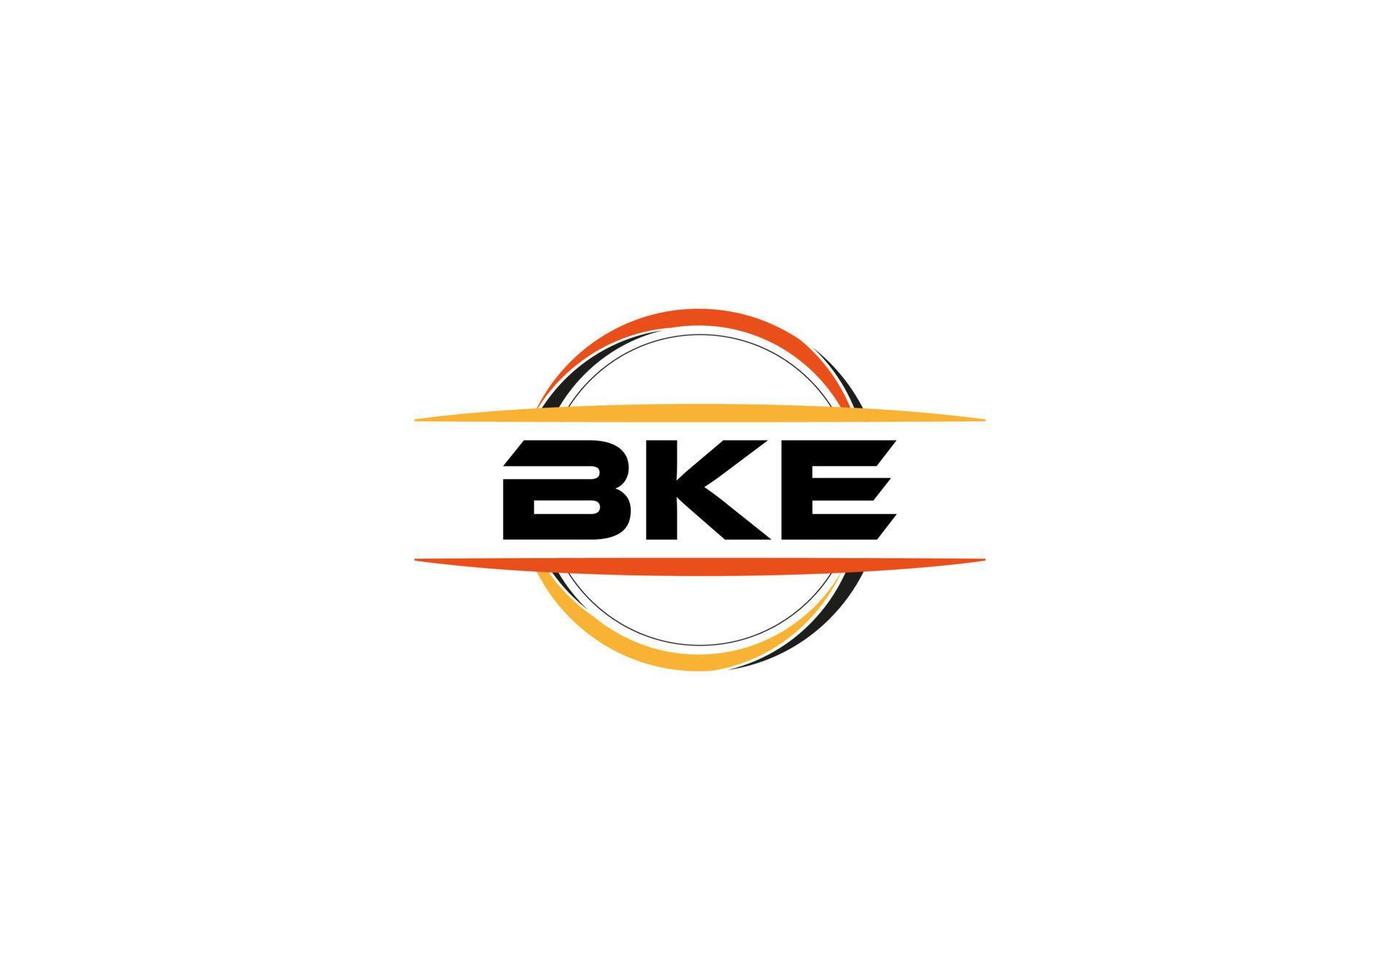 BKE letter royalty ellipse shape logo. BKE brush art logo. BKE logo for a company, business, and commercial use. vector